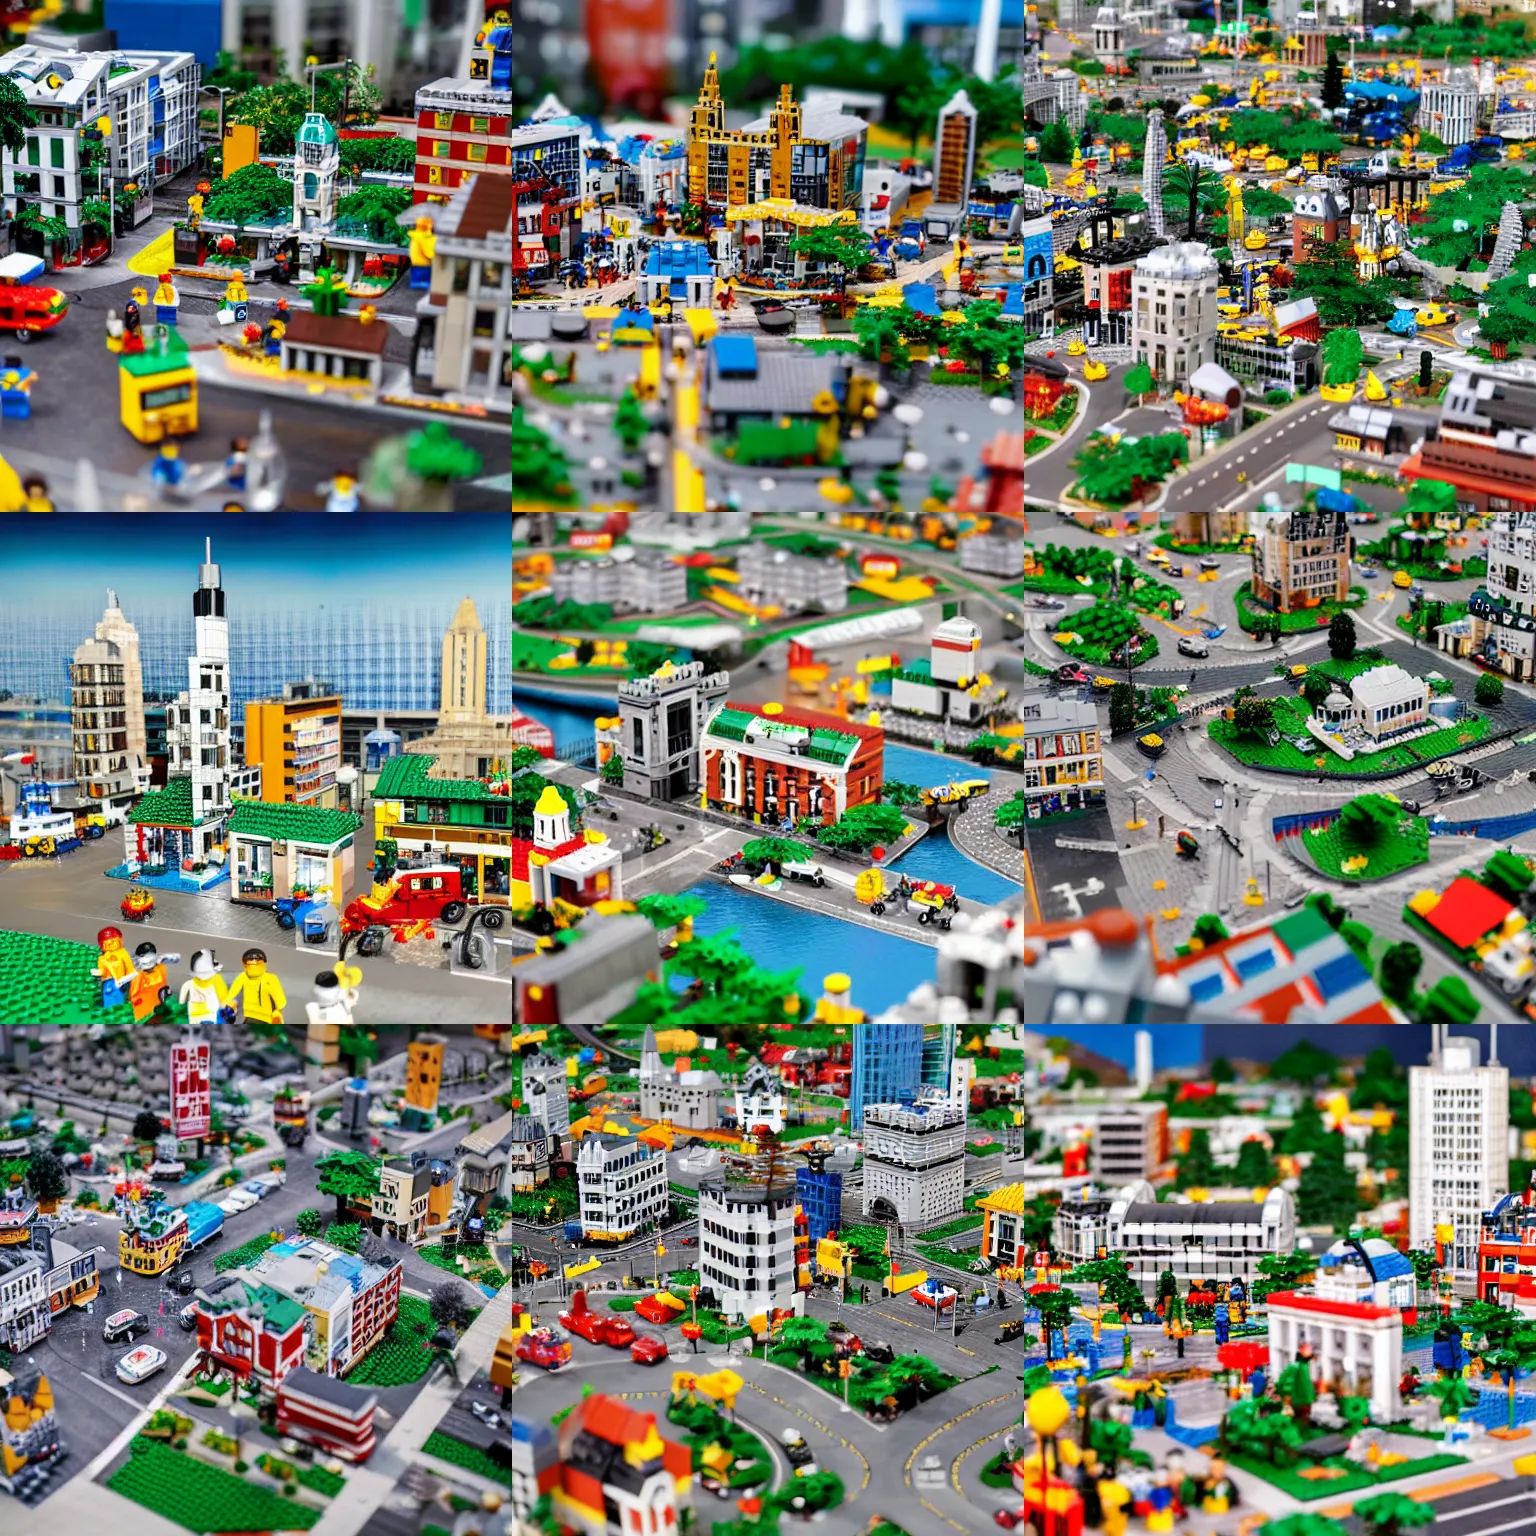 Prompt: of diorama lego town, macro shot